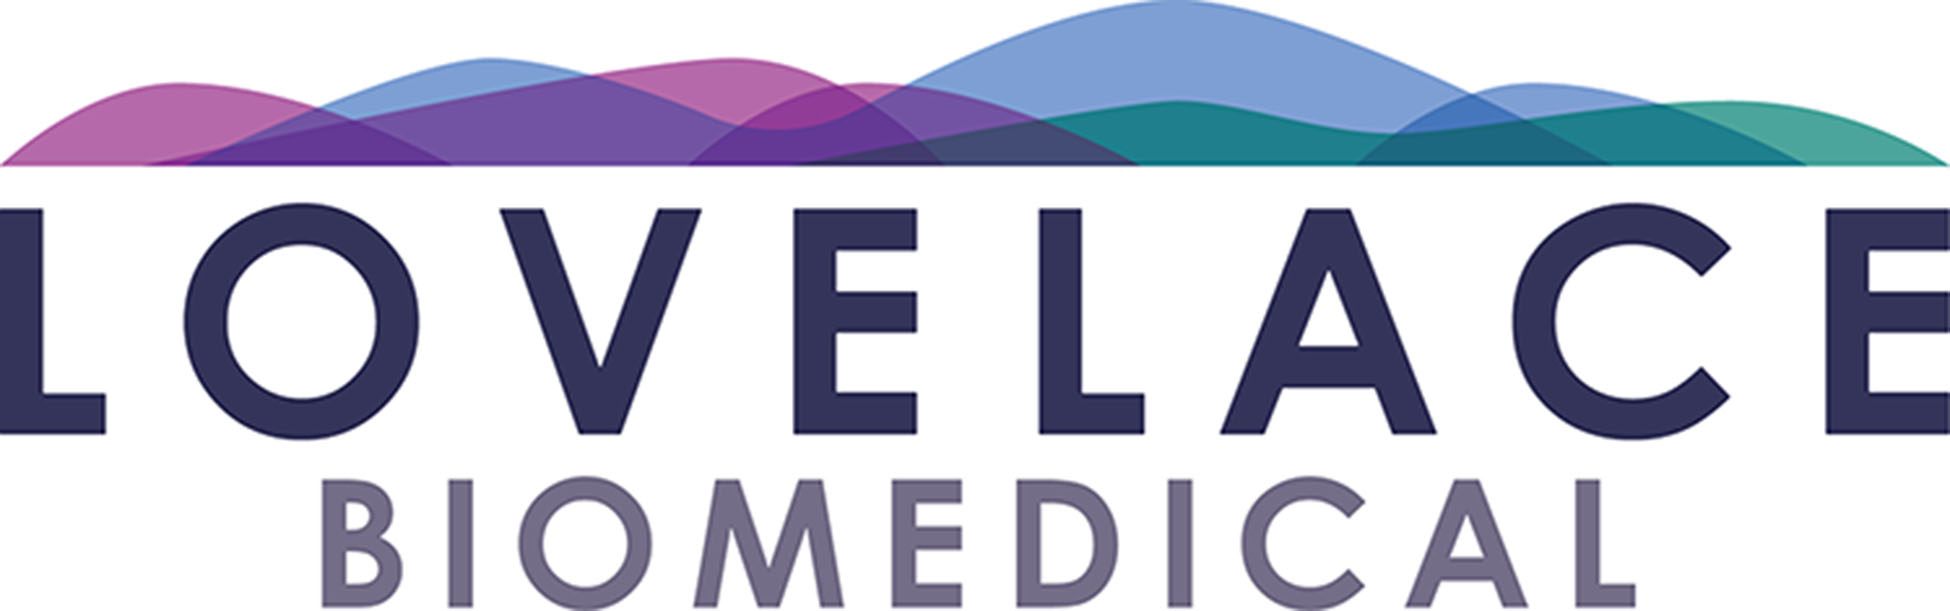 Logotipo biomédico de Lovelace